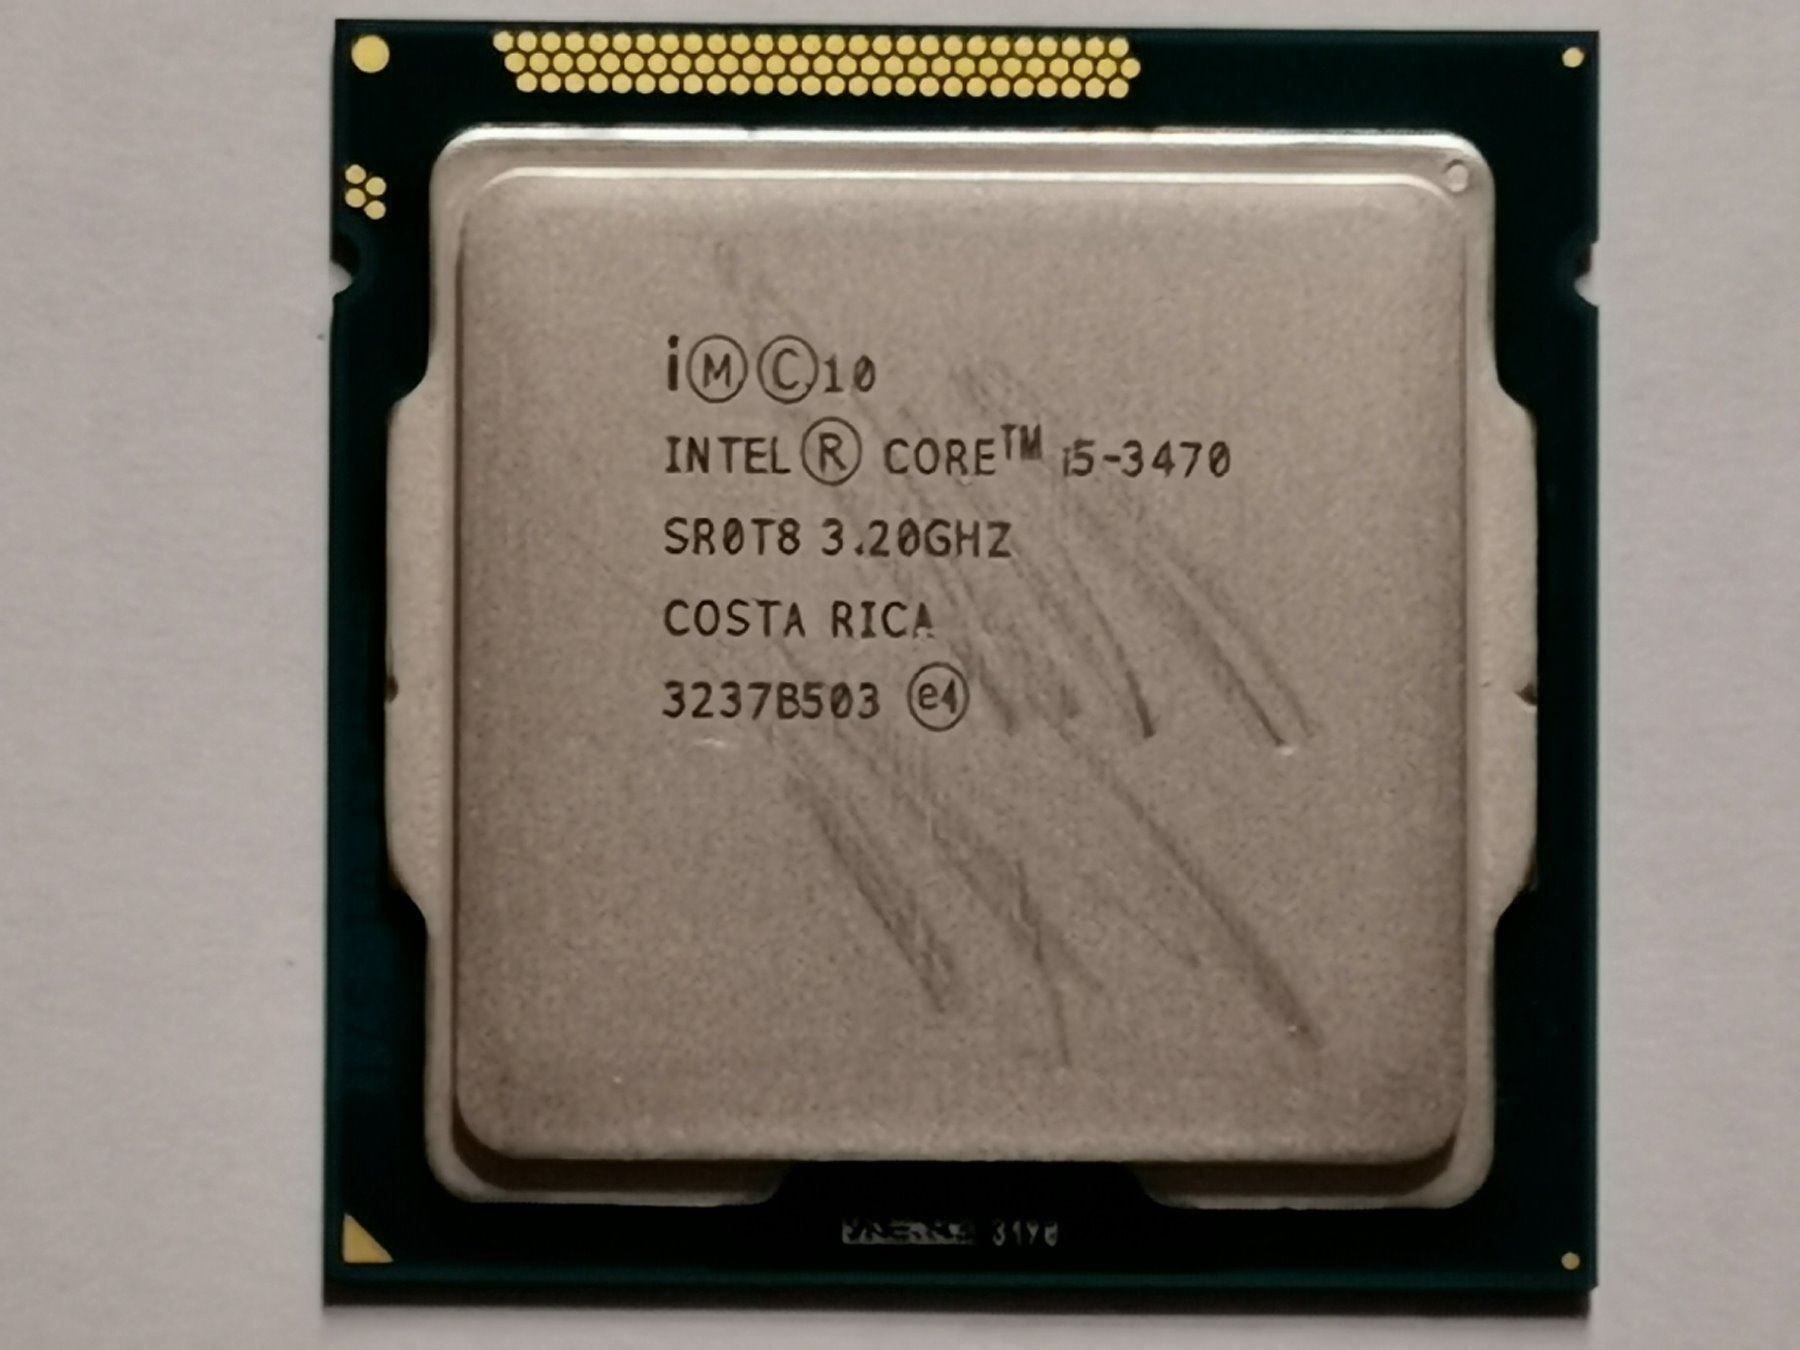 Интел 3470. Intel Core i5 3470. Intel(r) Core(TM) i5-3470 CPU @ 3.20GHZ 3.20 GHZ. I5 3470 характеристики. I5 3470 s spec.